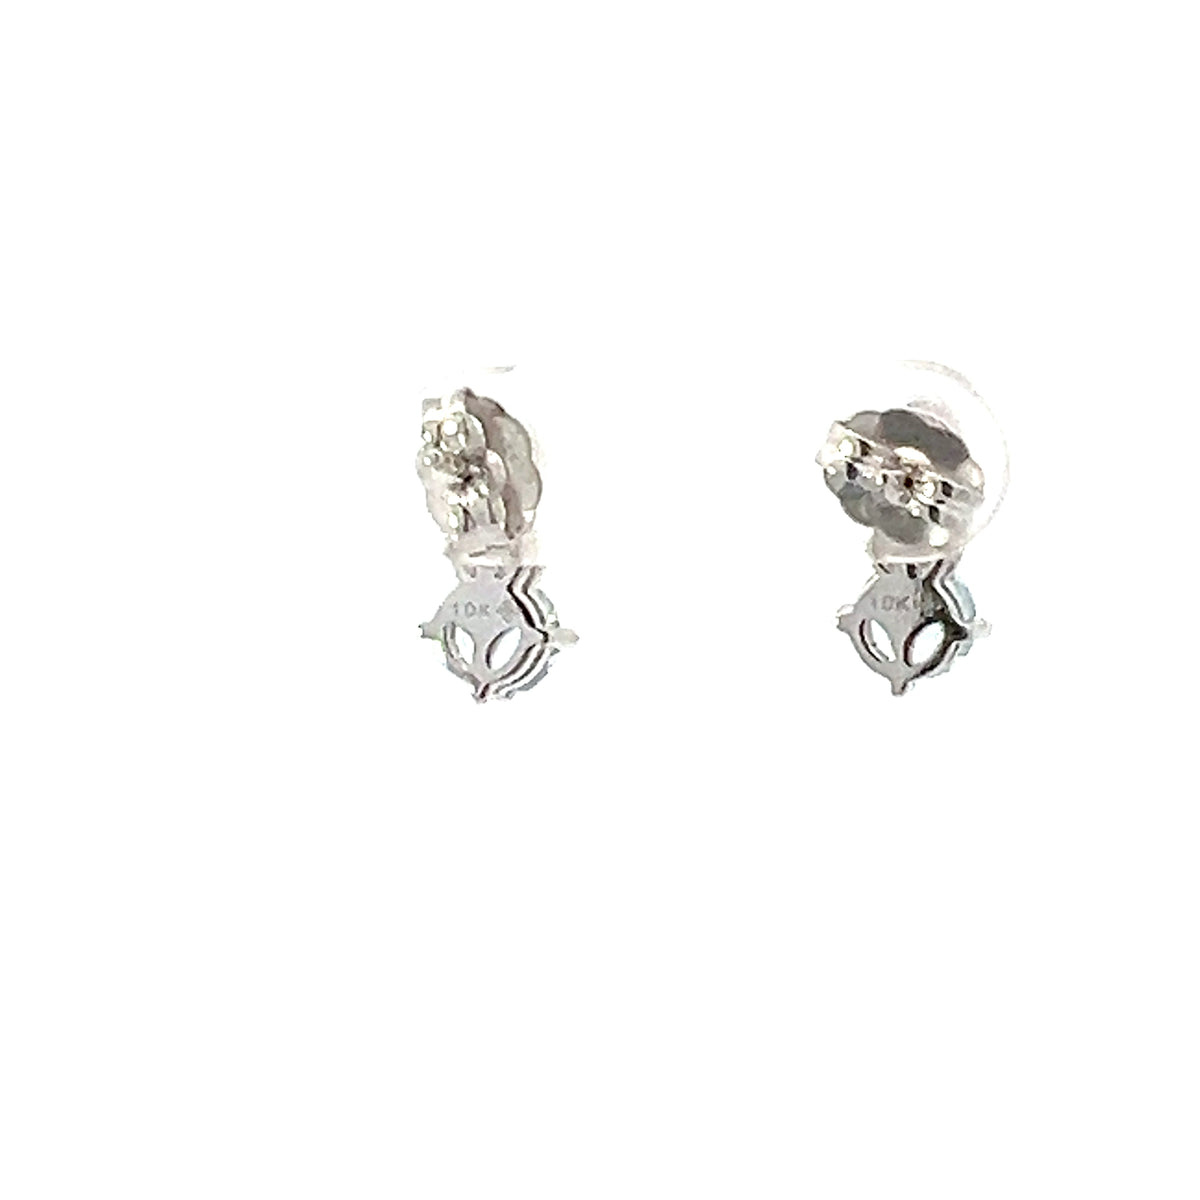 10K White Gold Diamond and Aquamarine Earrings